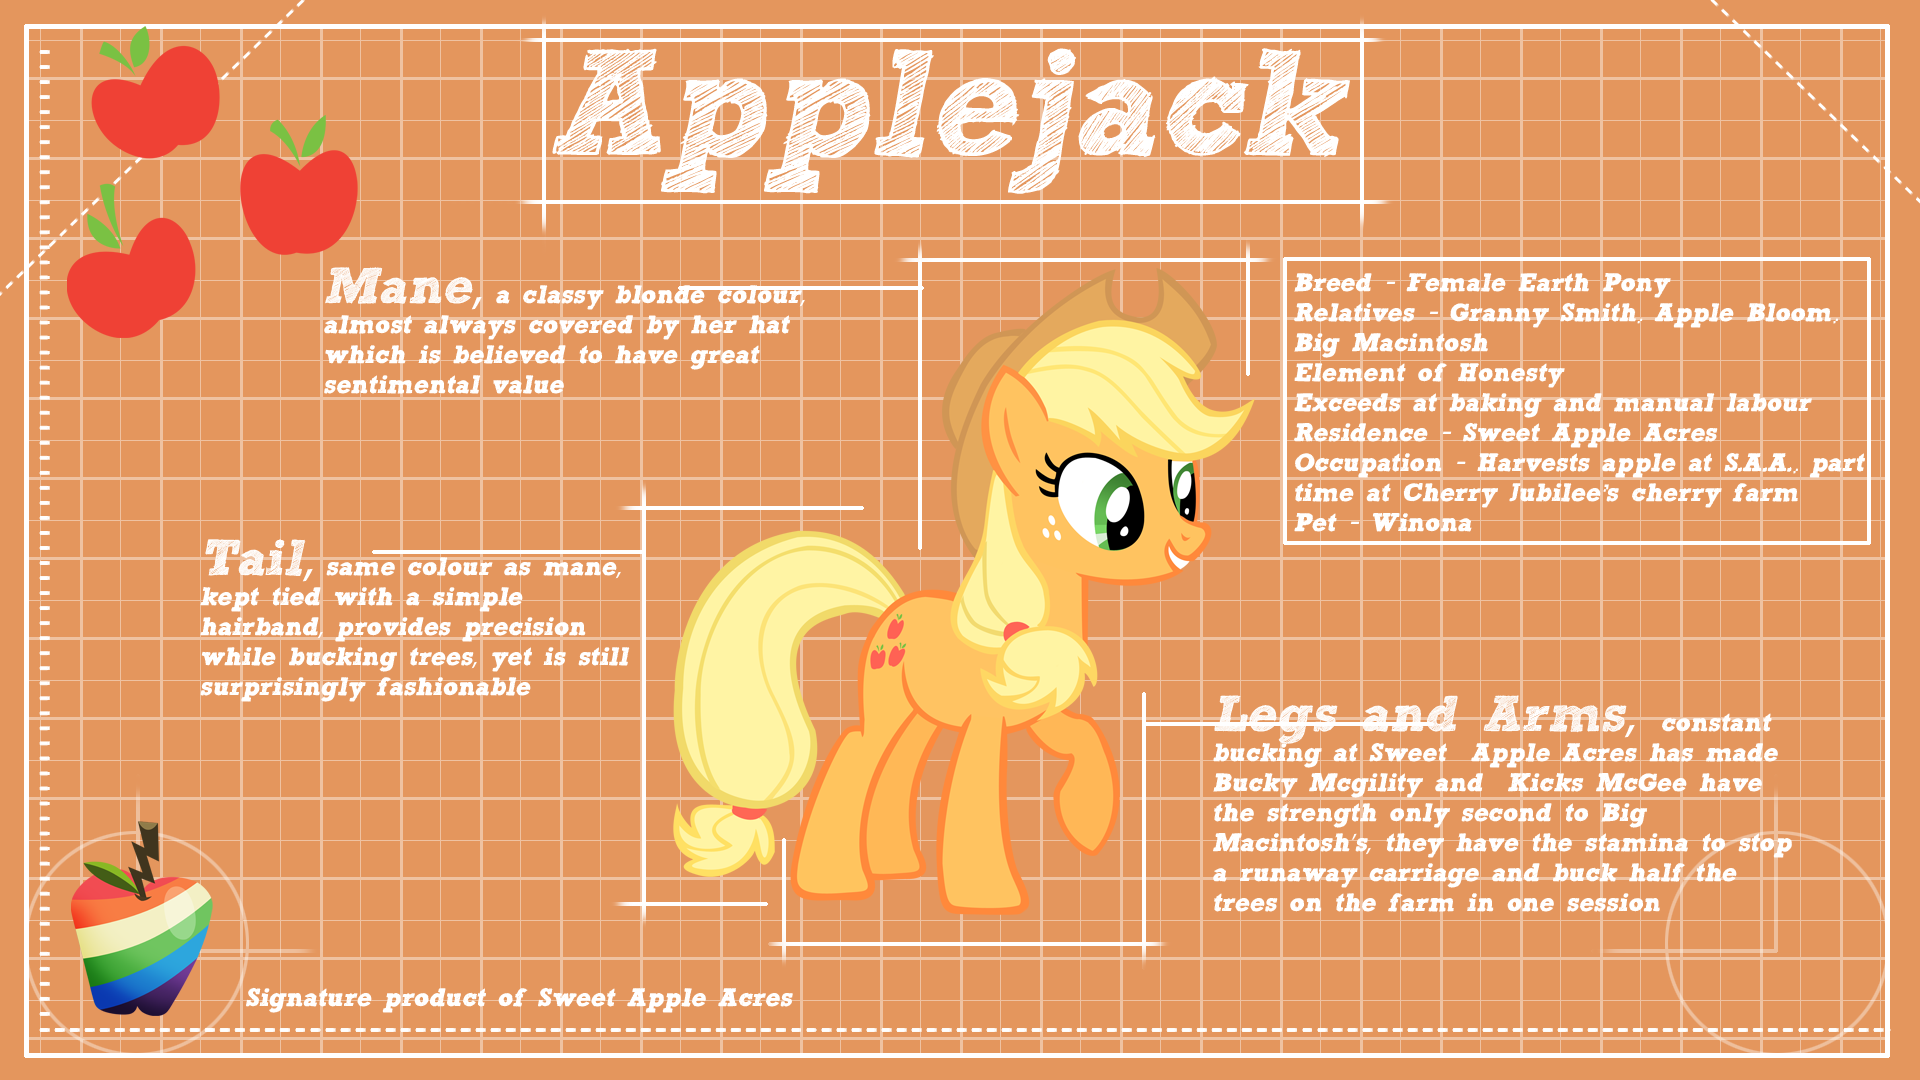 Applejack Design by BlackGryph0n, ikonradx, Shelmo69 and Stormius